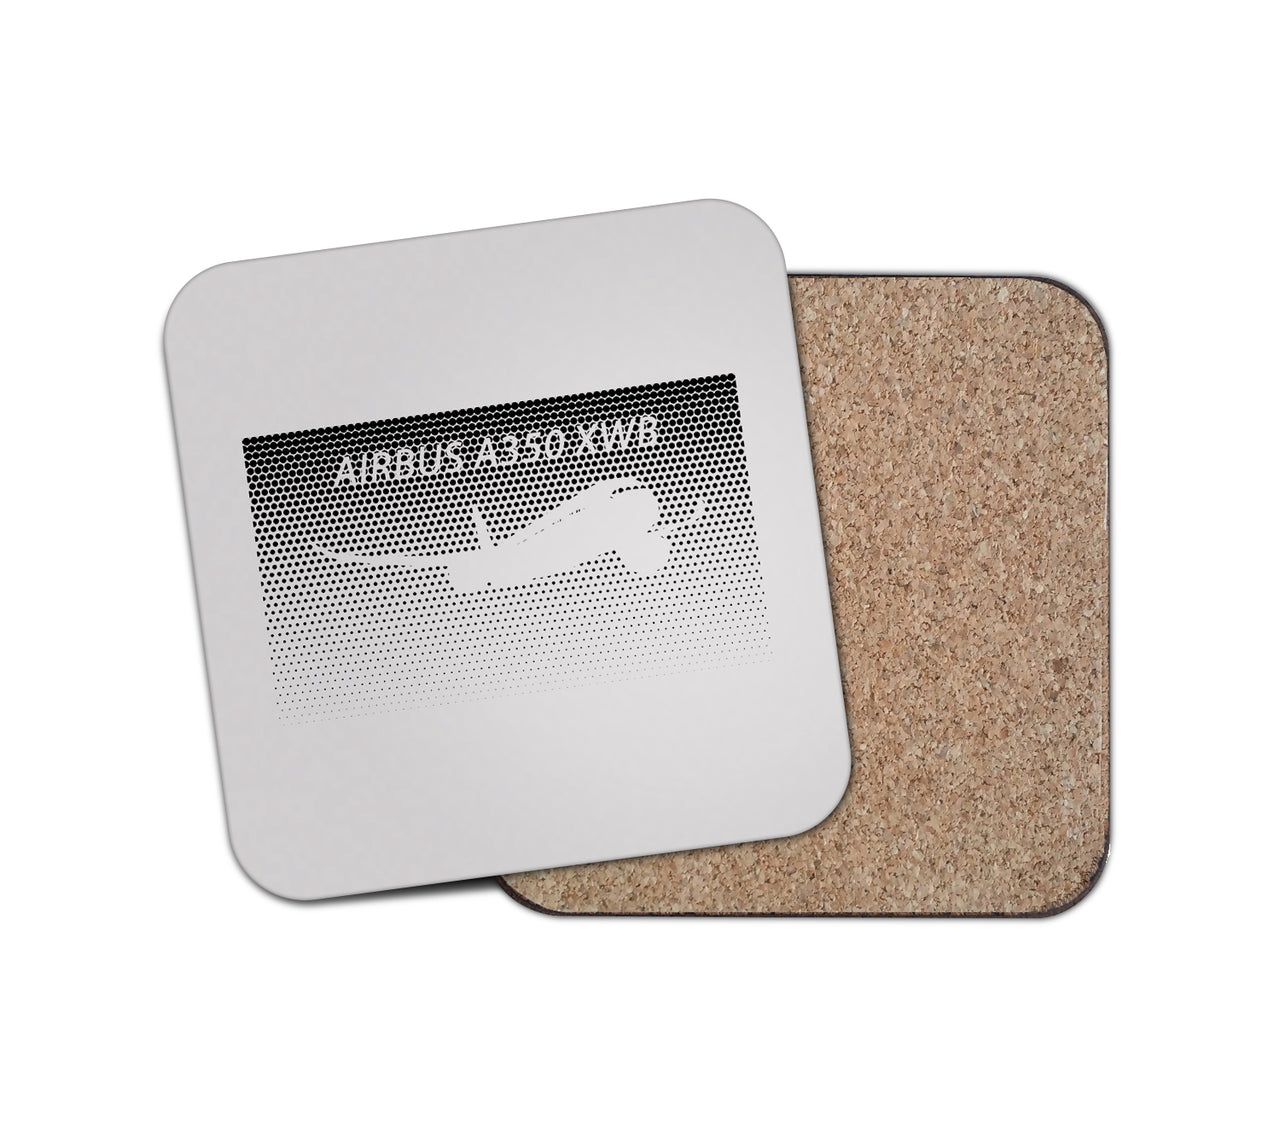 Airbus A350XWB & Dots Designed Coasters